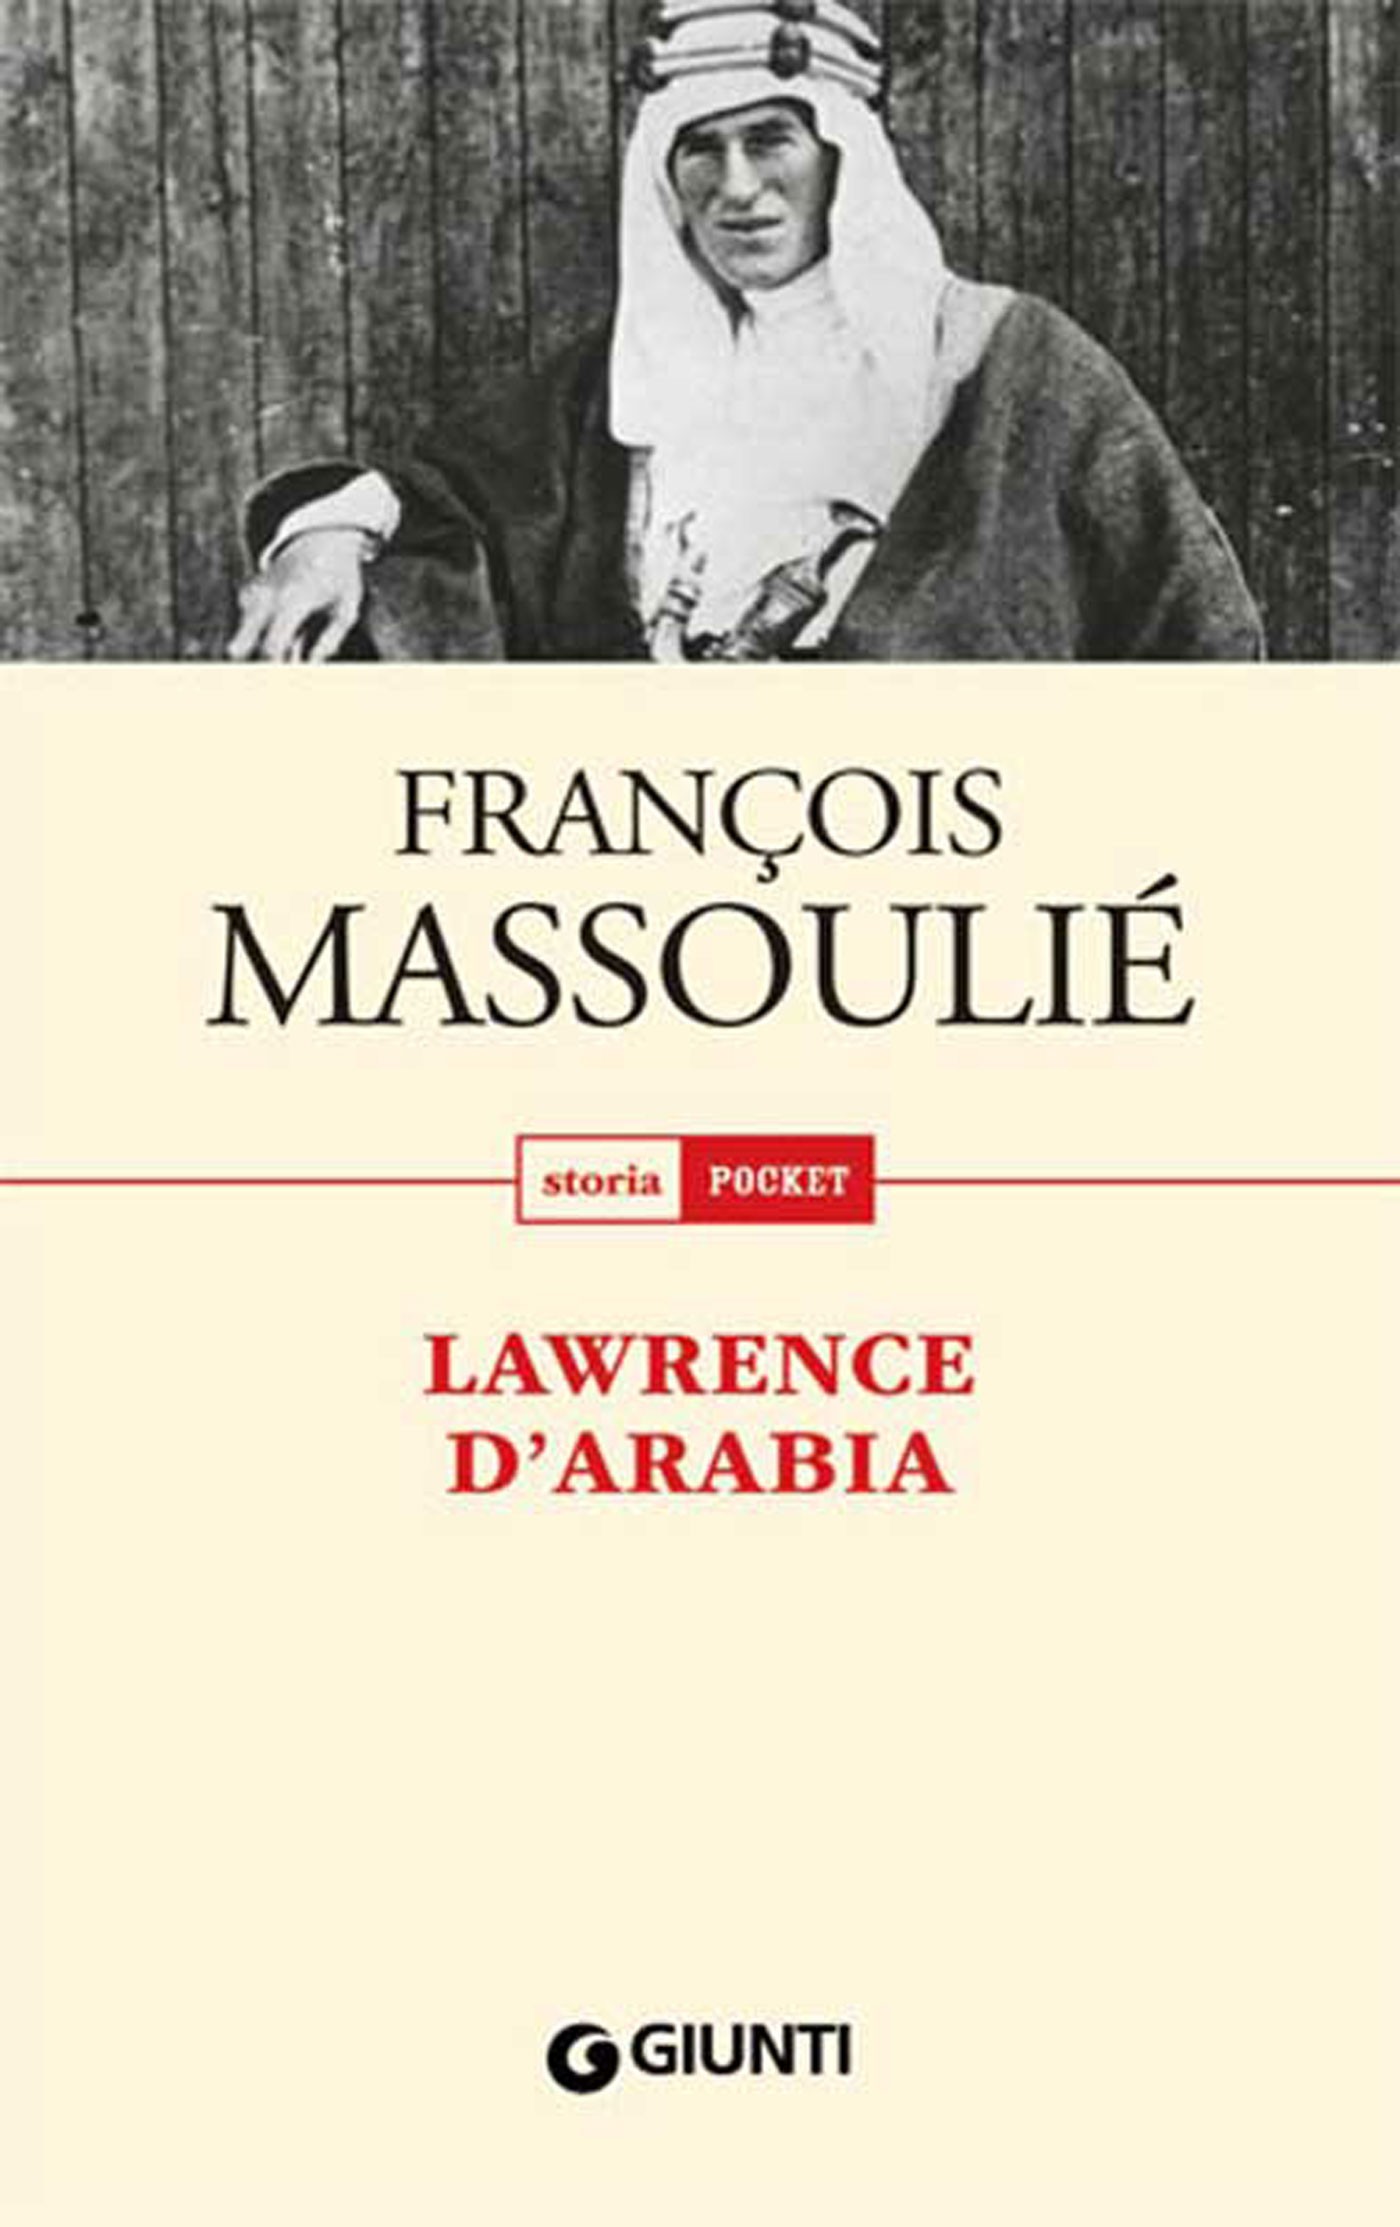 Lawrence d'Arabia - Librerie.coop